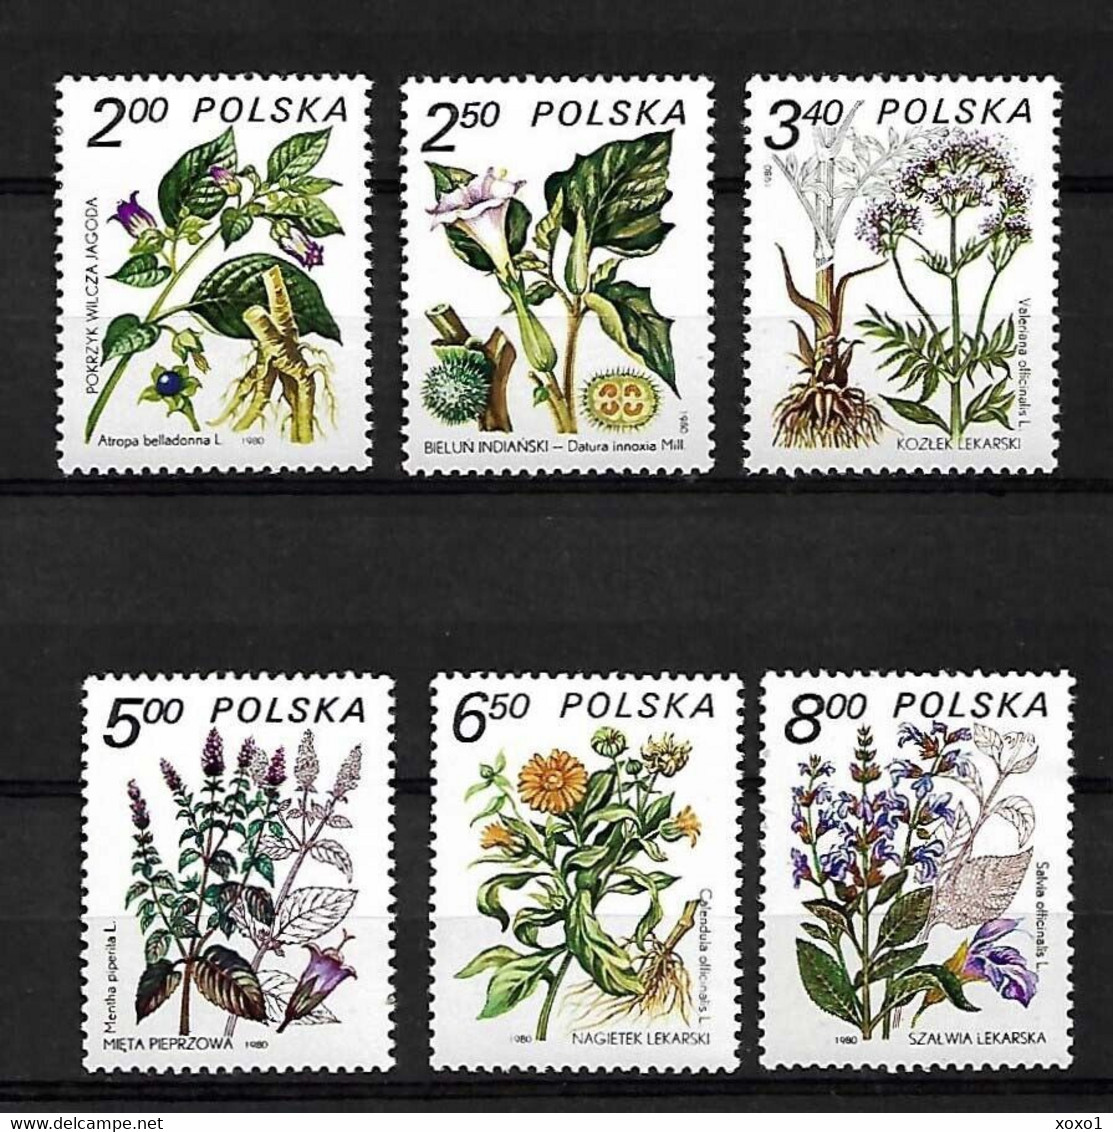 Poland 1980 MiNr. 2706 - 2711 Polen Medicinal Plants 6v MNH**  3.00 € - Heilpflanzen